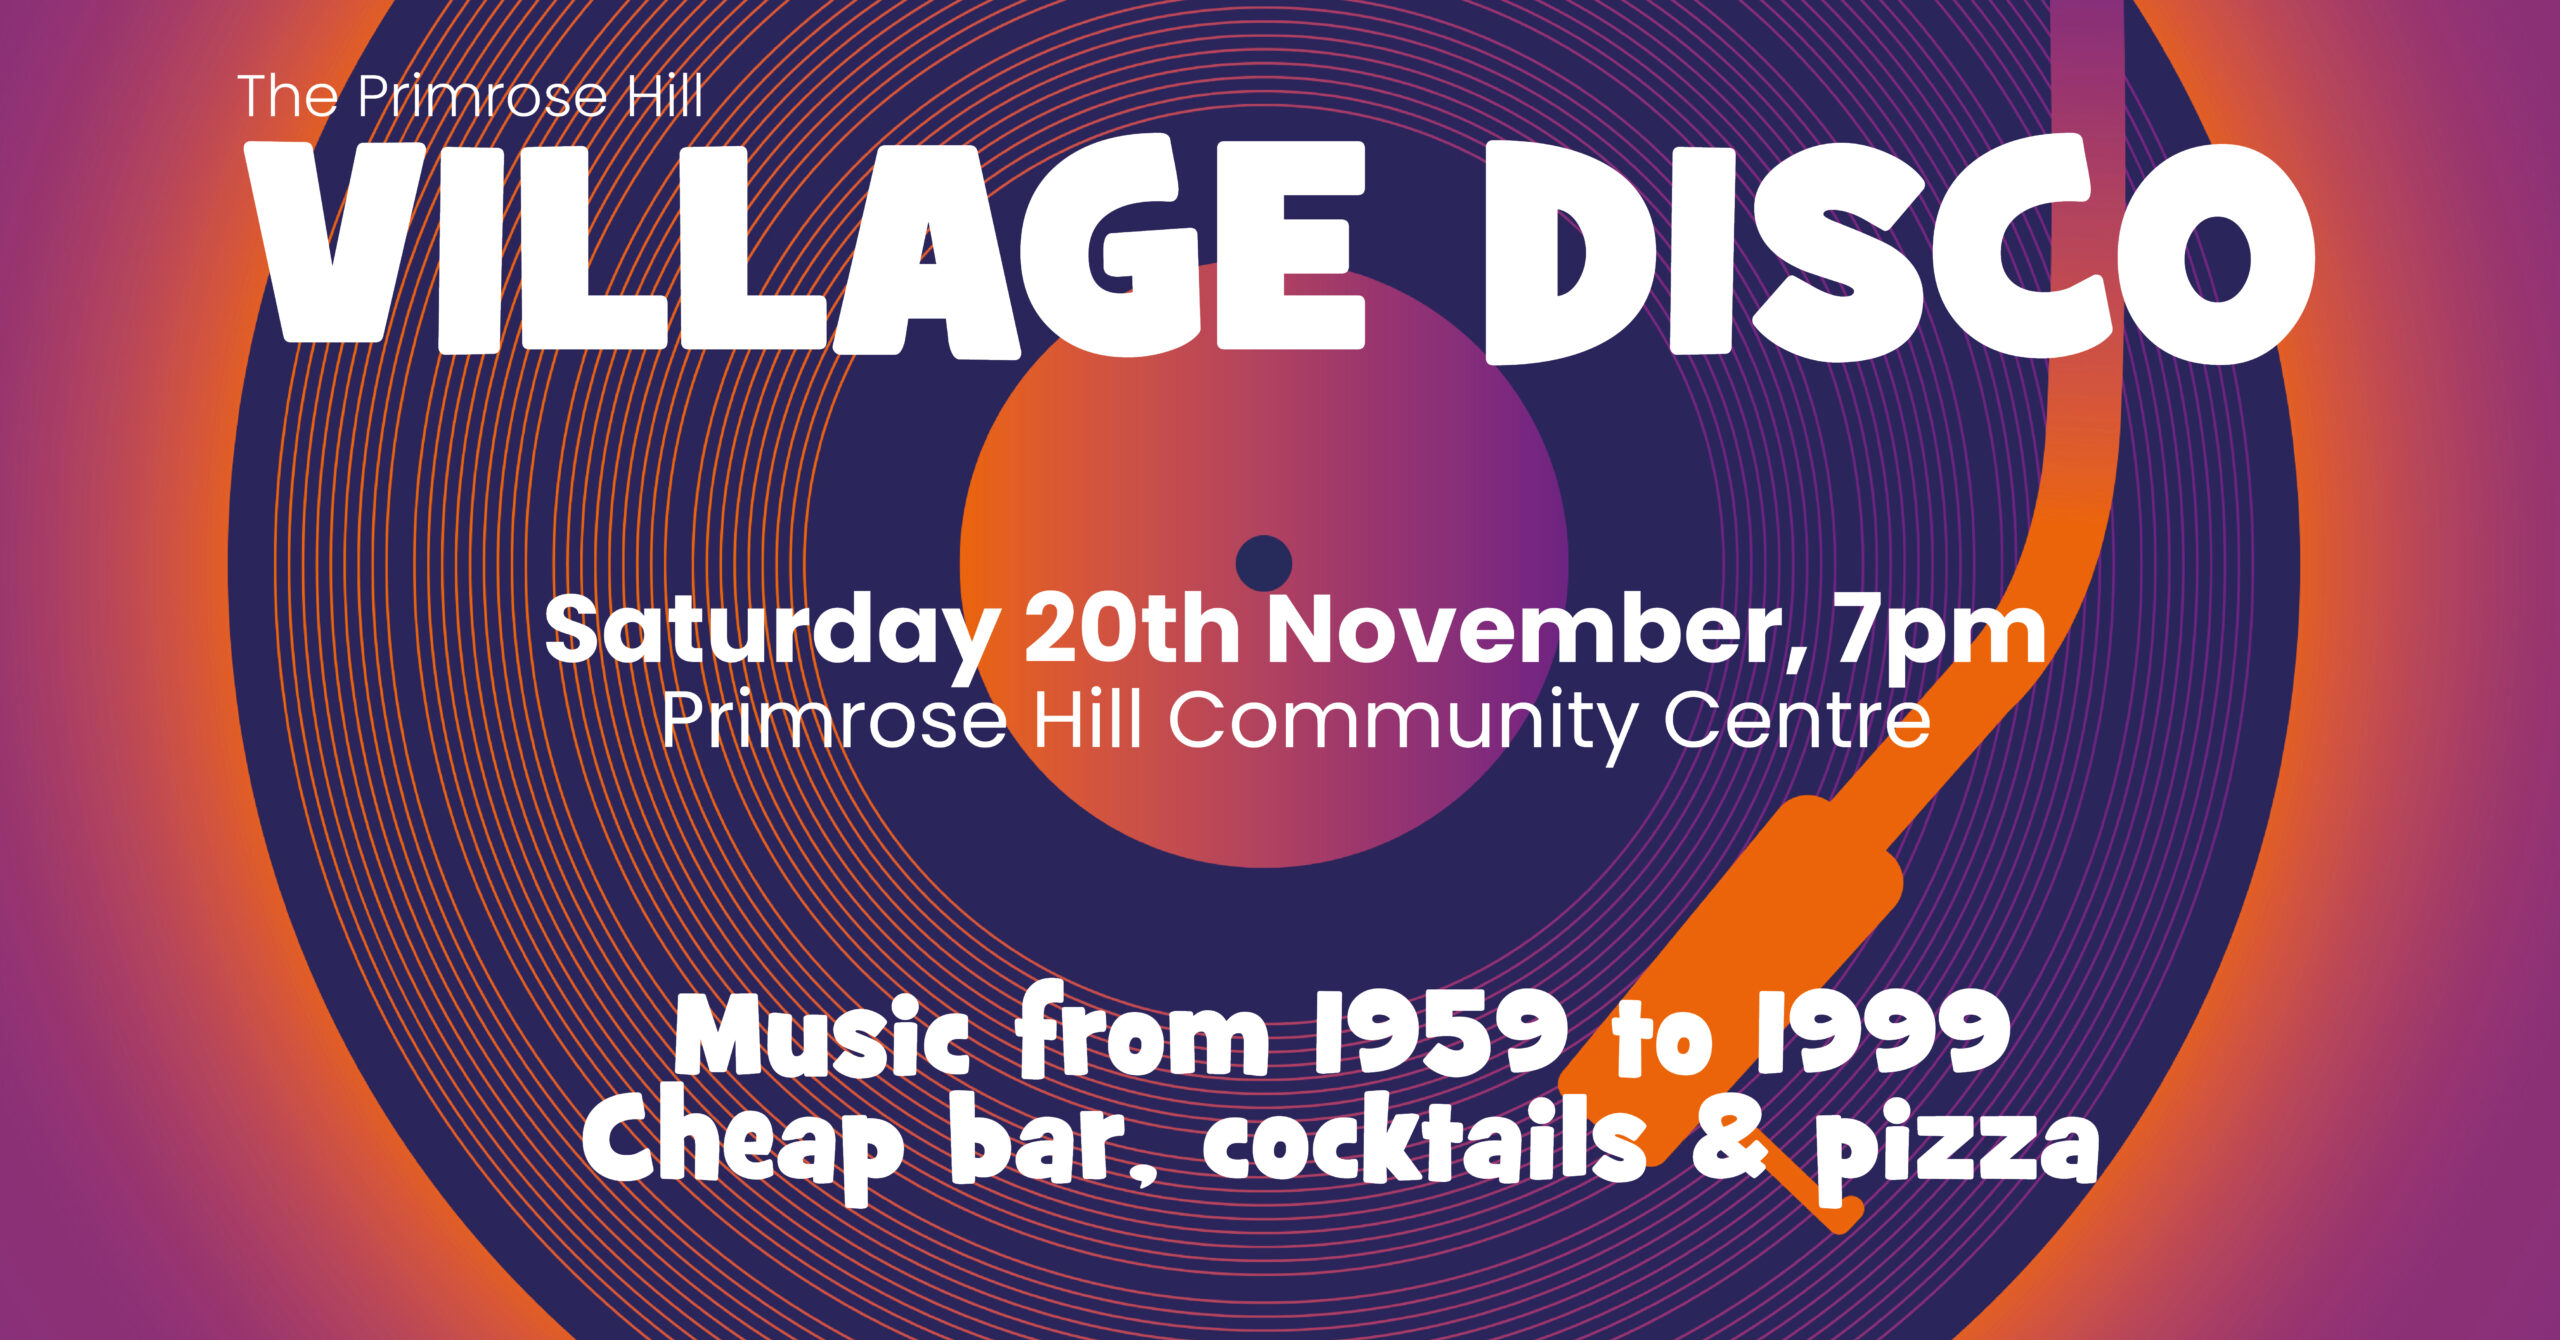 CANCELLED - The Primrose Hill Village Disco